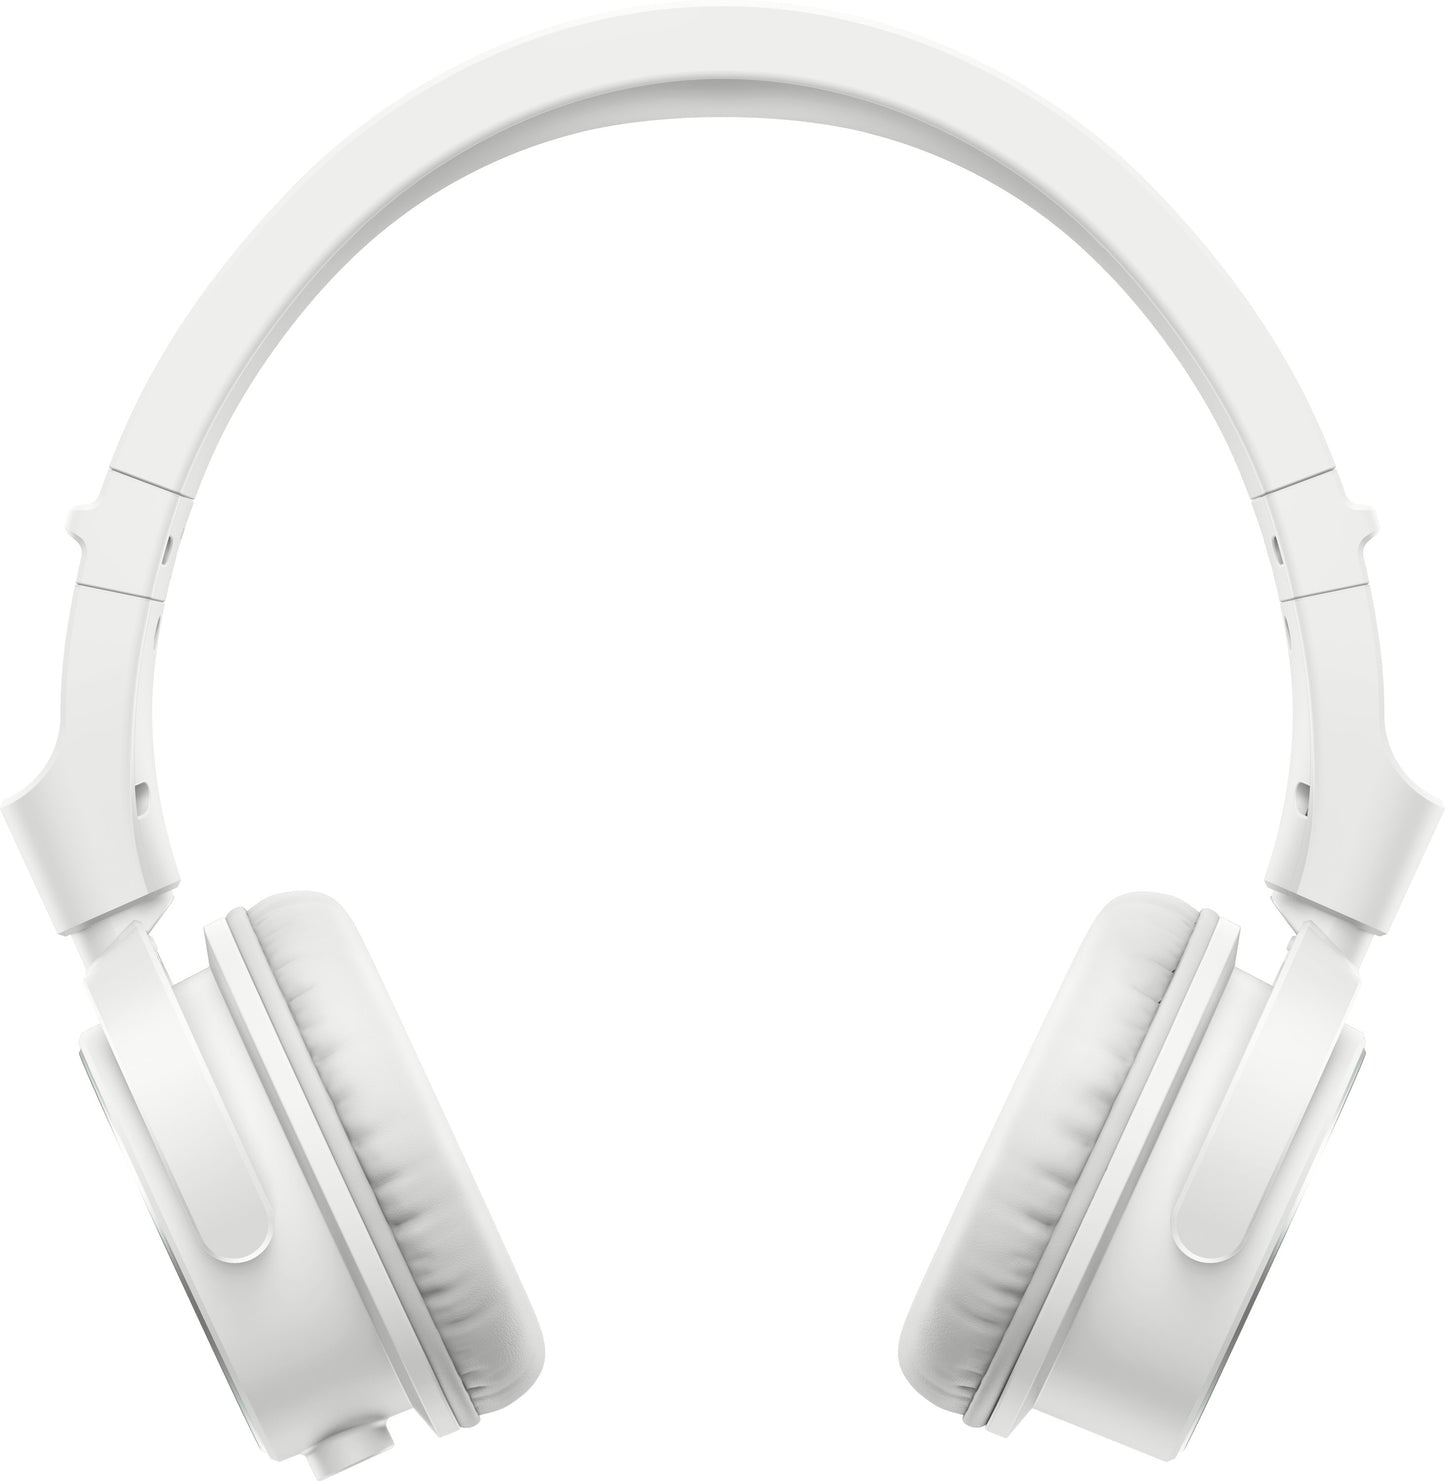 Pioneer DJ HDJ-S7-W Professional on-ear DJ headphones - White